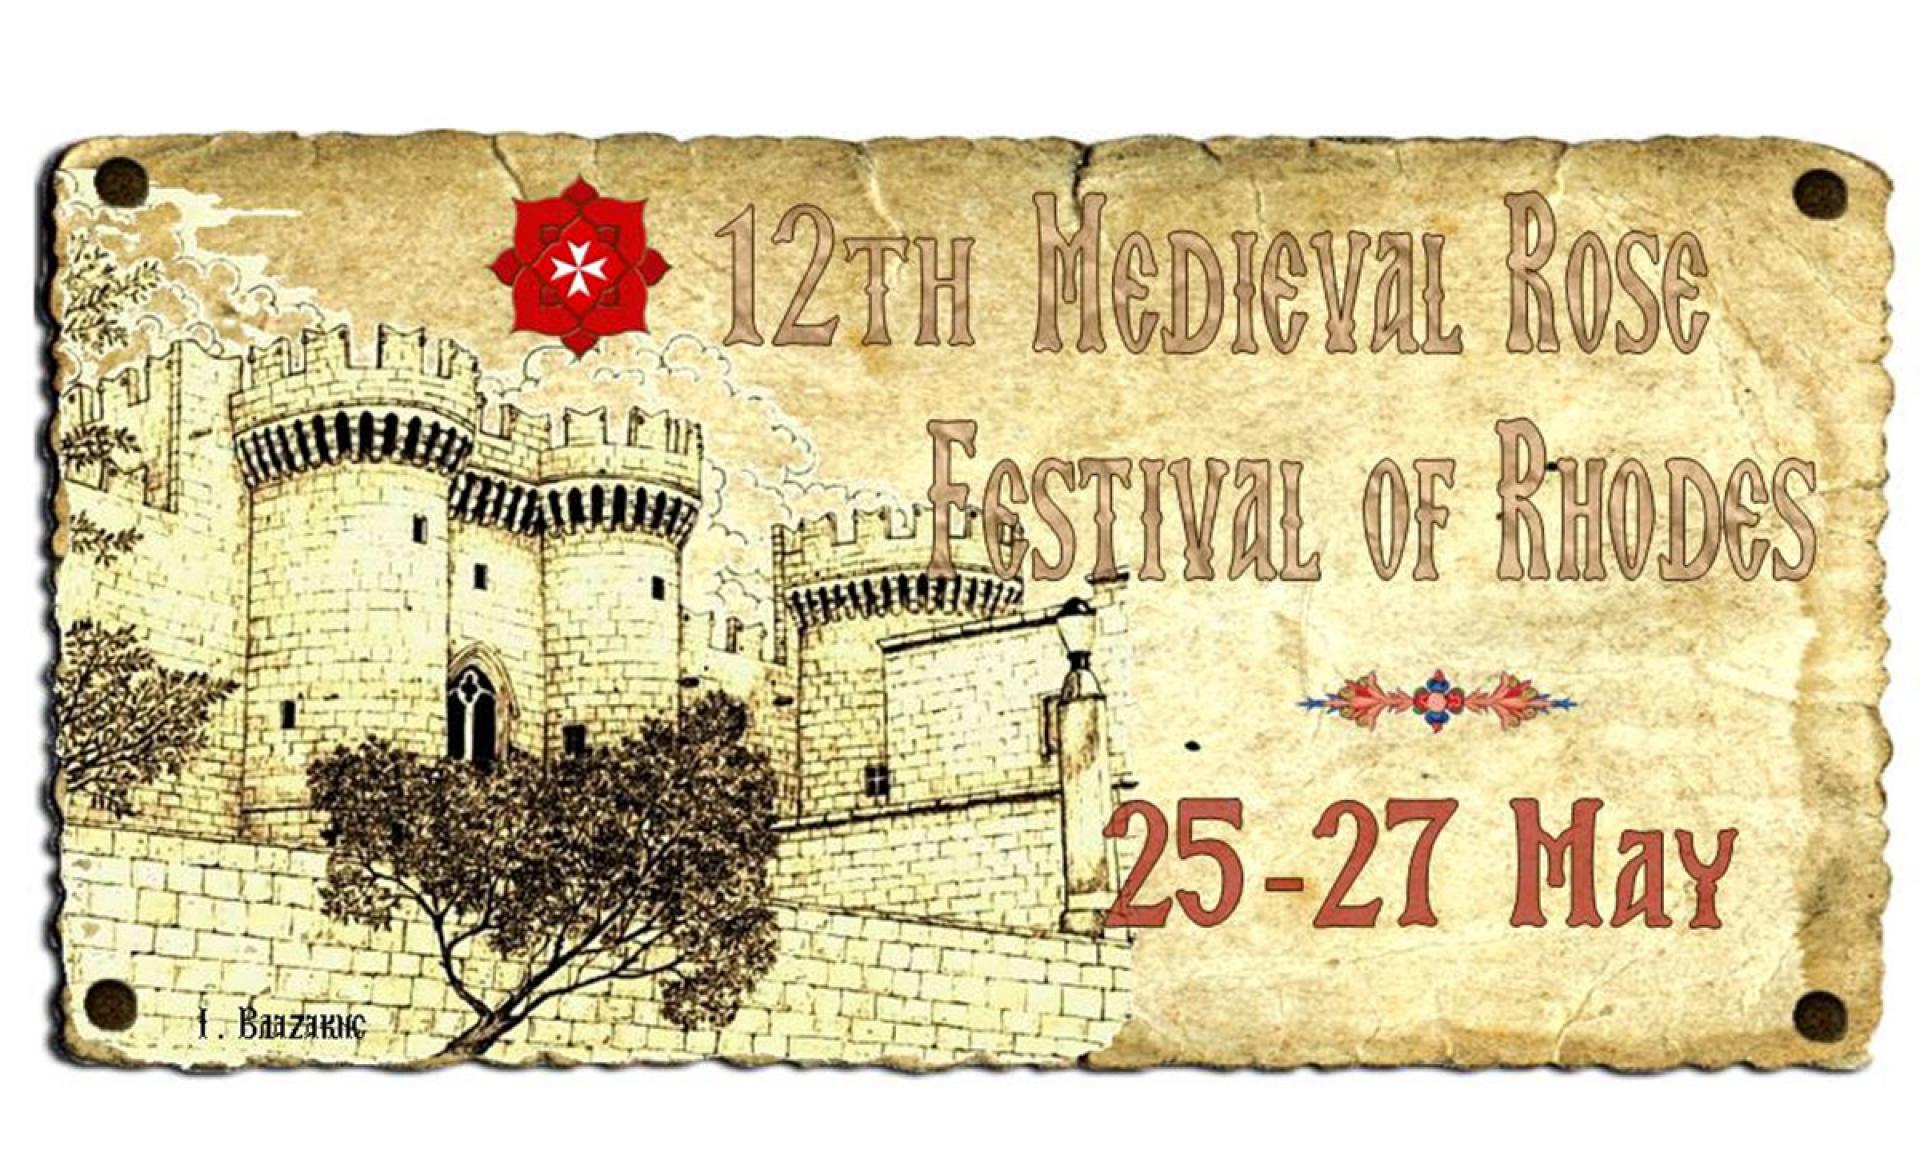 25/05 - 27/05: Medieval Festival of Rhodes